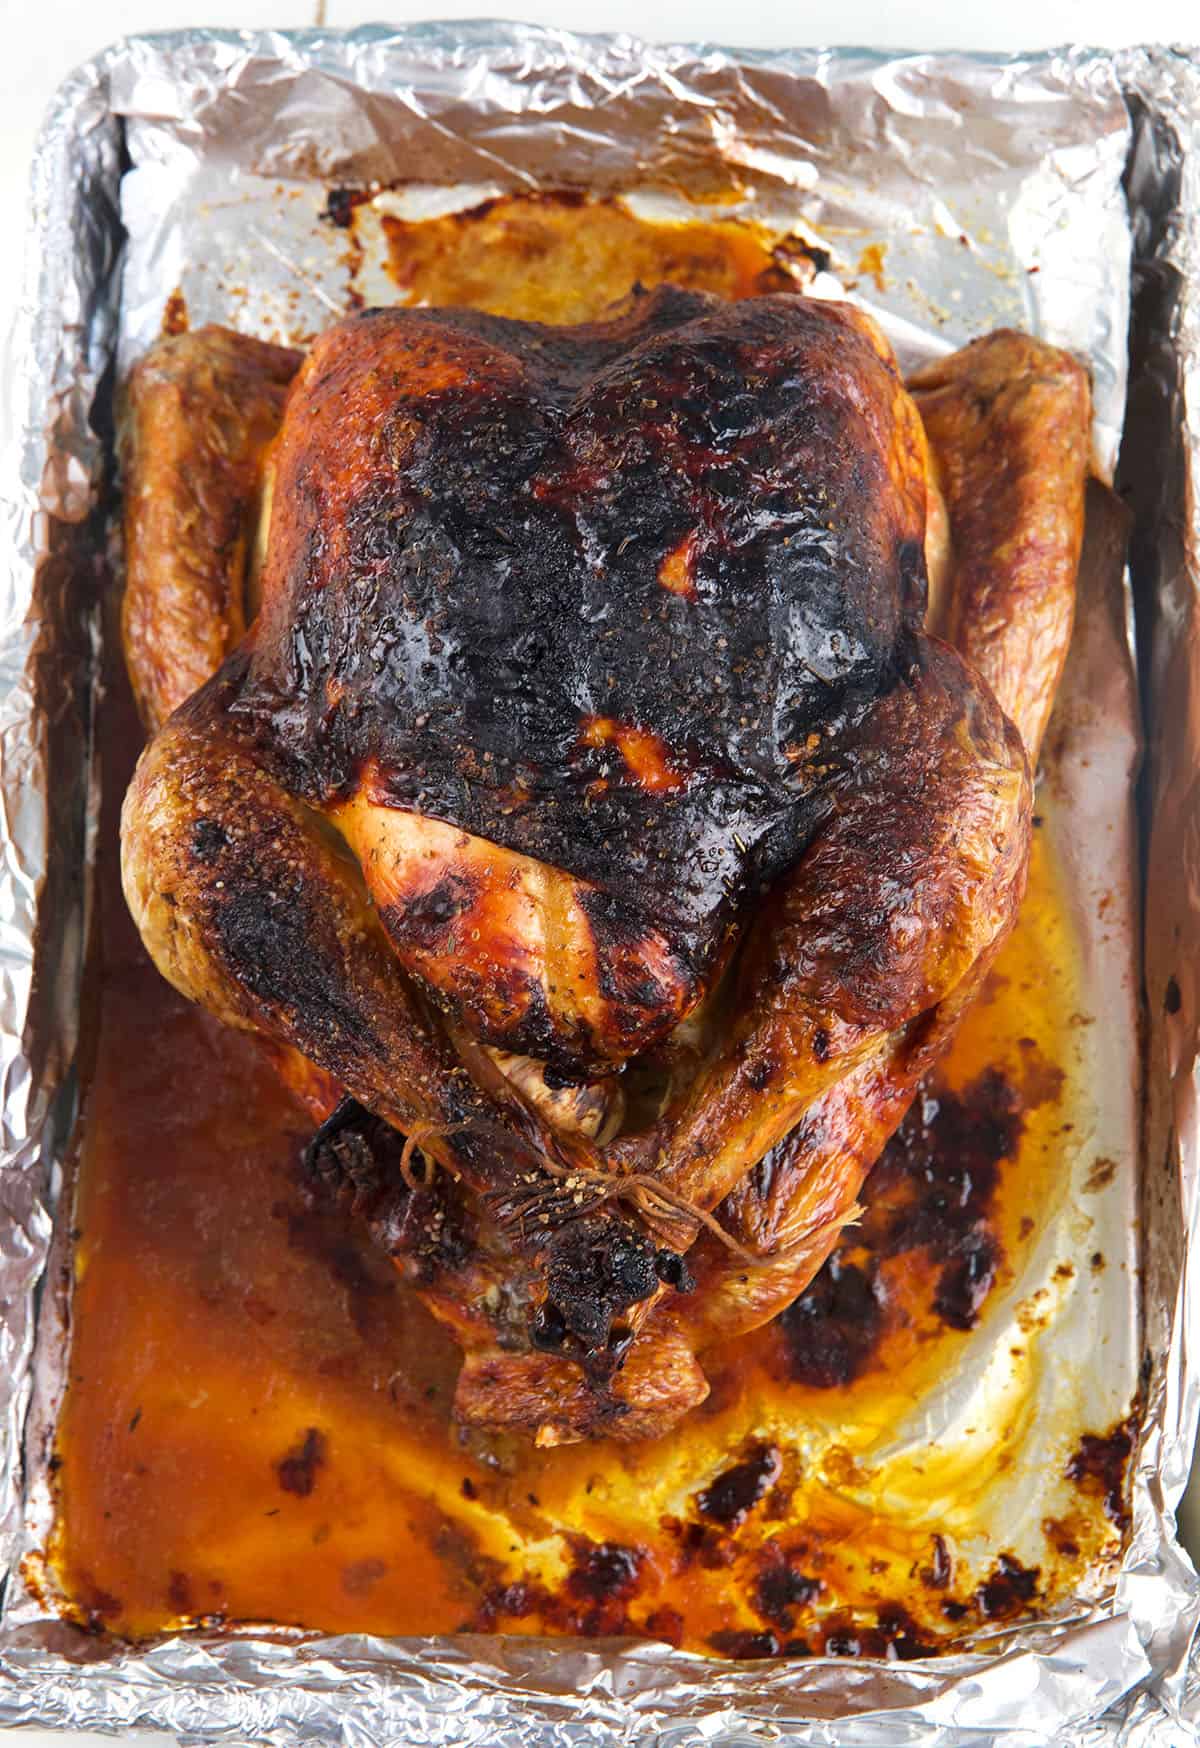 A whole roast turkey is presented on a roasting pan.